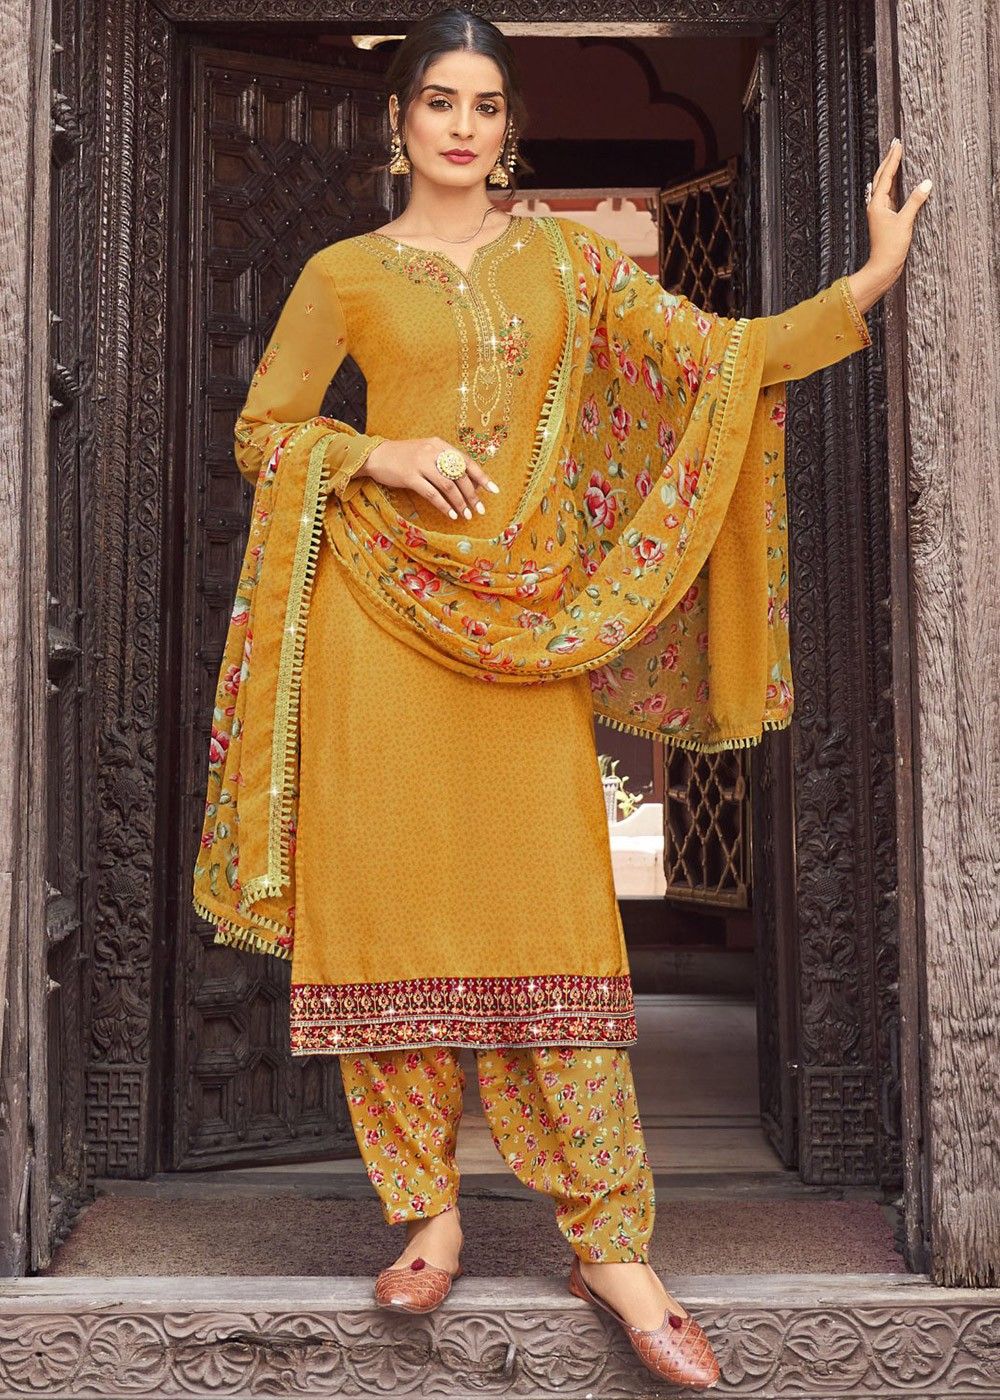 Punjabi suit light shade for summers | Punjabi outfits, Indian designer  suits, Pakistani wedding outfits